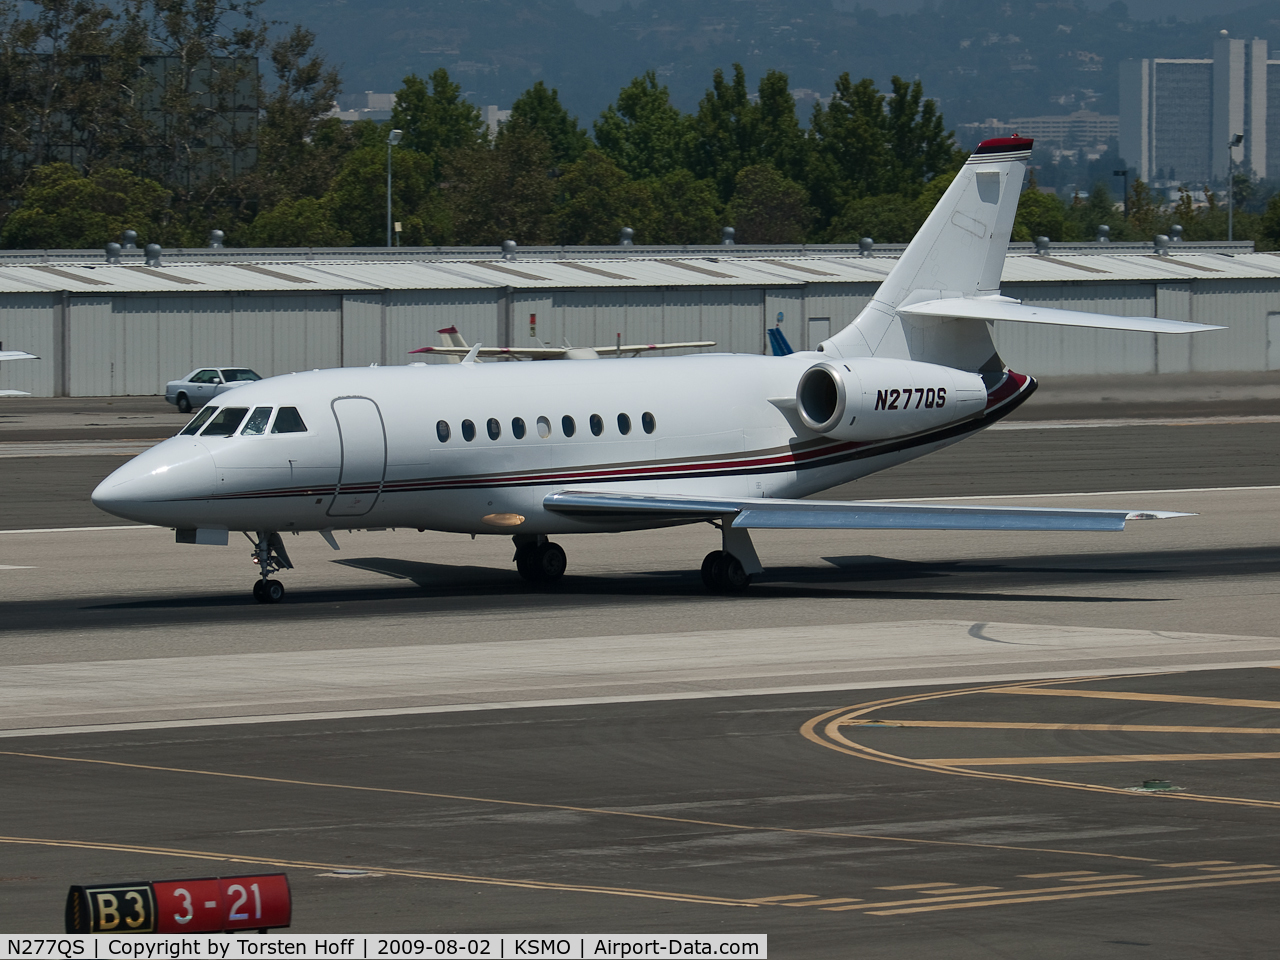 N277QS, 2002 Dassault Falcon 2000 C/N 177, N277QS departing from RWY 21